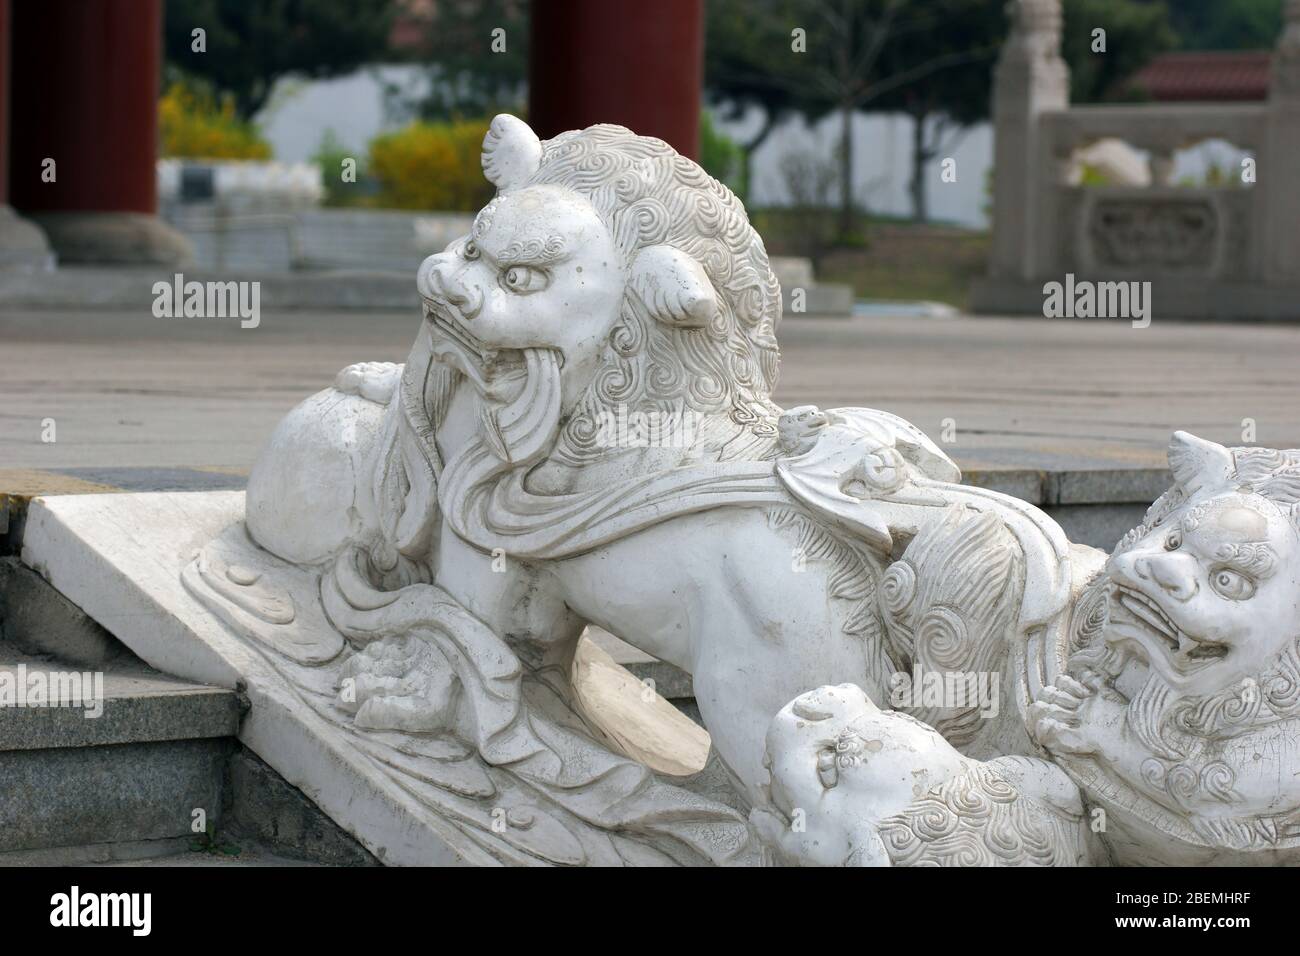 Chinese guardian lions, Imperial guardian lions, Shi, Foo Dog, Fu Dog, Lion Dog. Jade Buddha Park, Anshan, Liaoning Province, China, Asia. Stock Photo